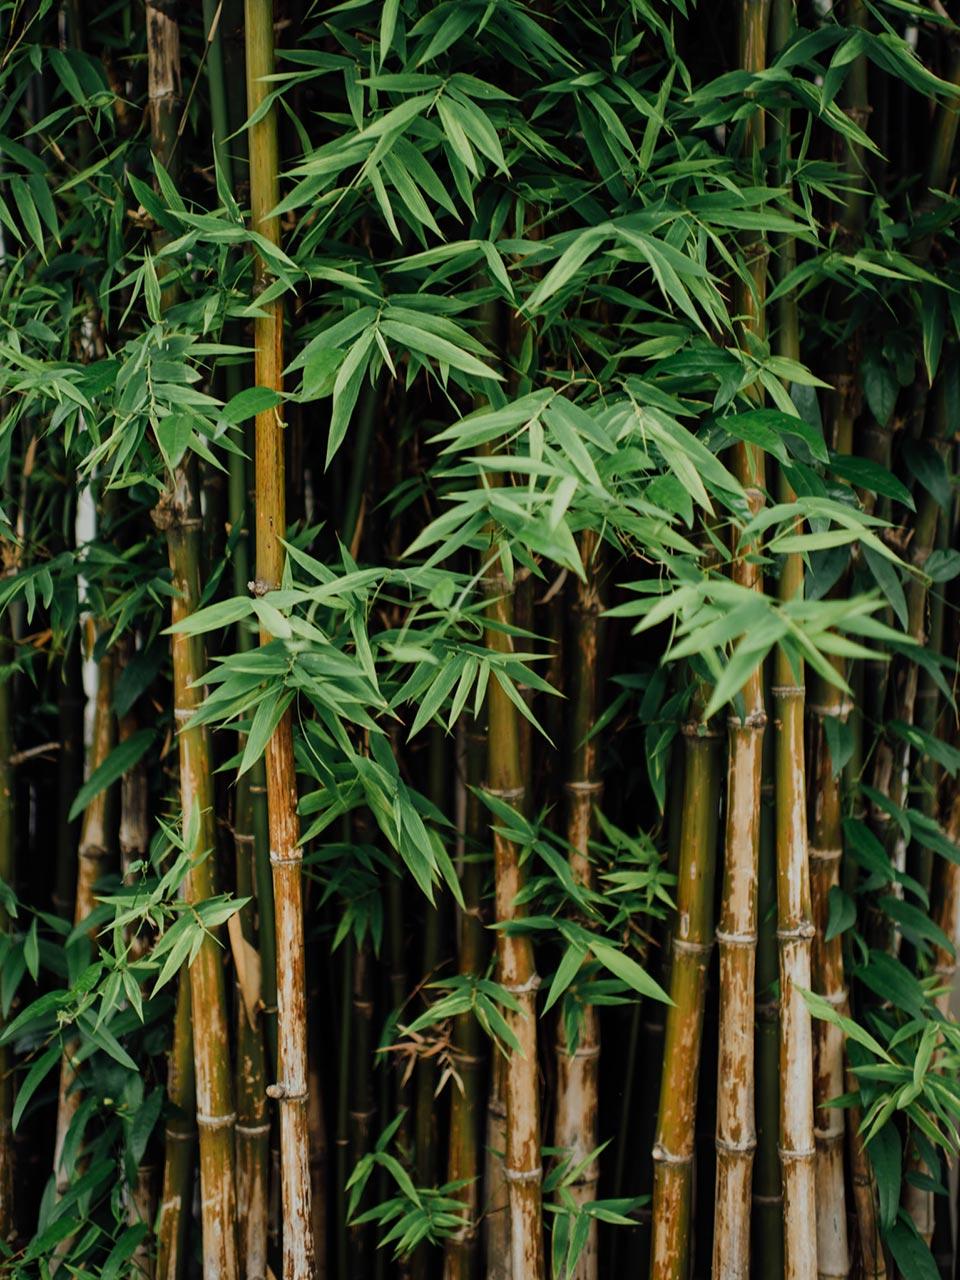 leaf image of bamboo